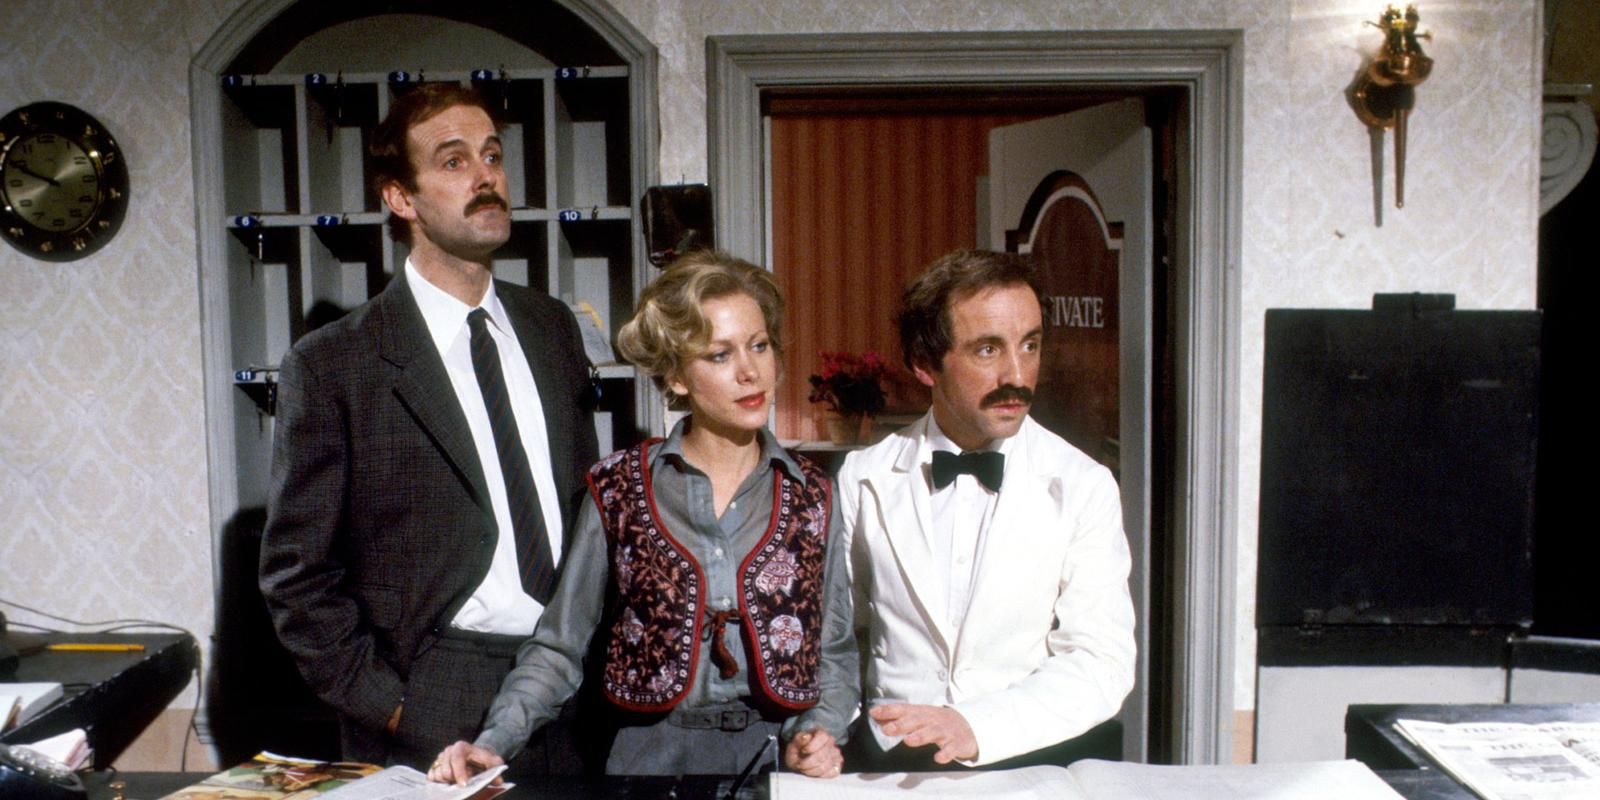 John Cleese 10 Best Movies & TV Shows Ranked (According To IMDb)